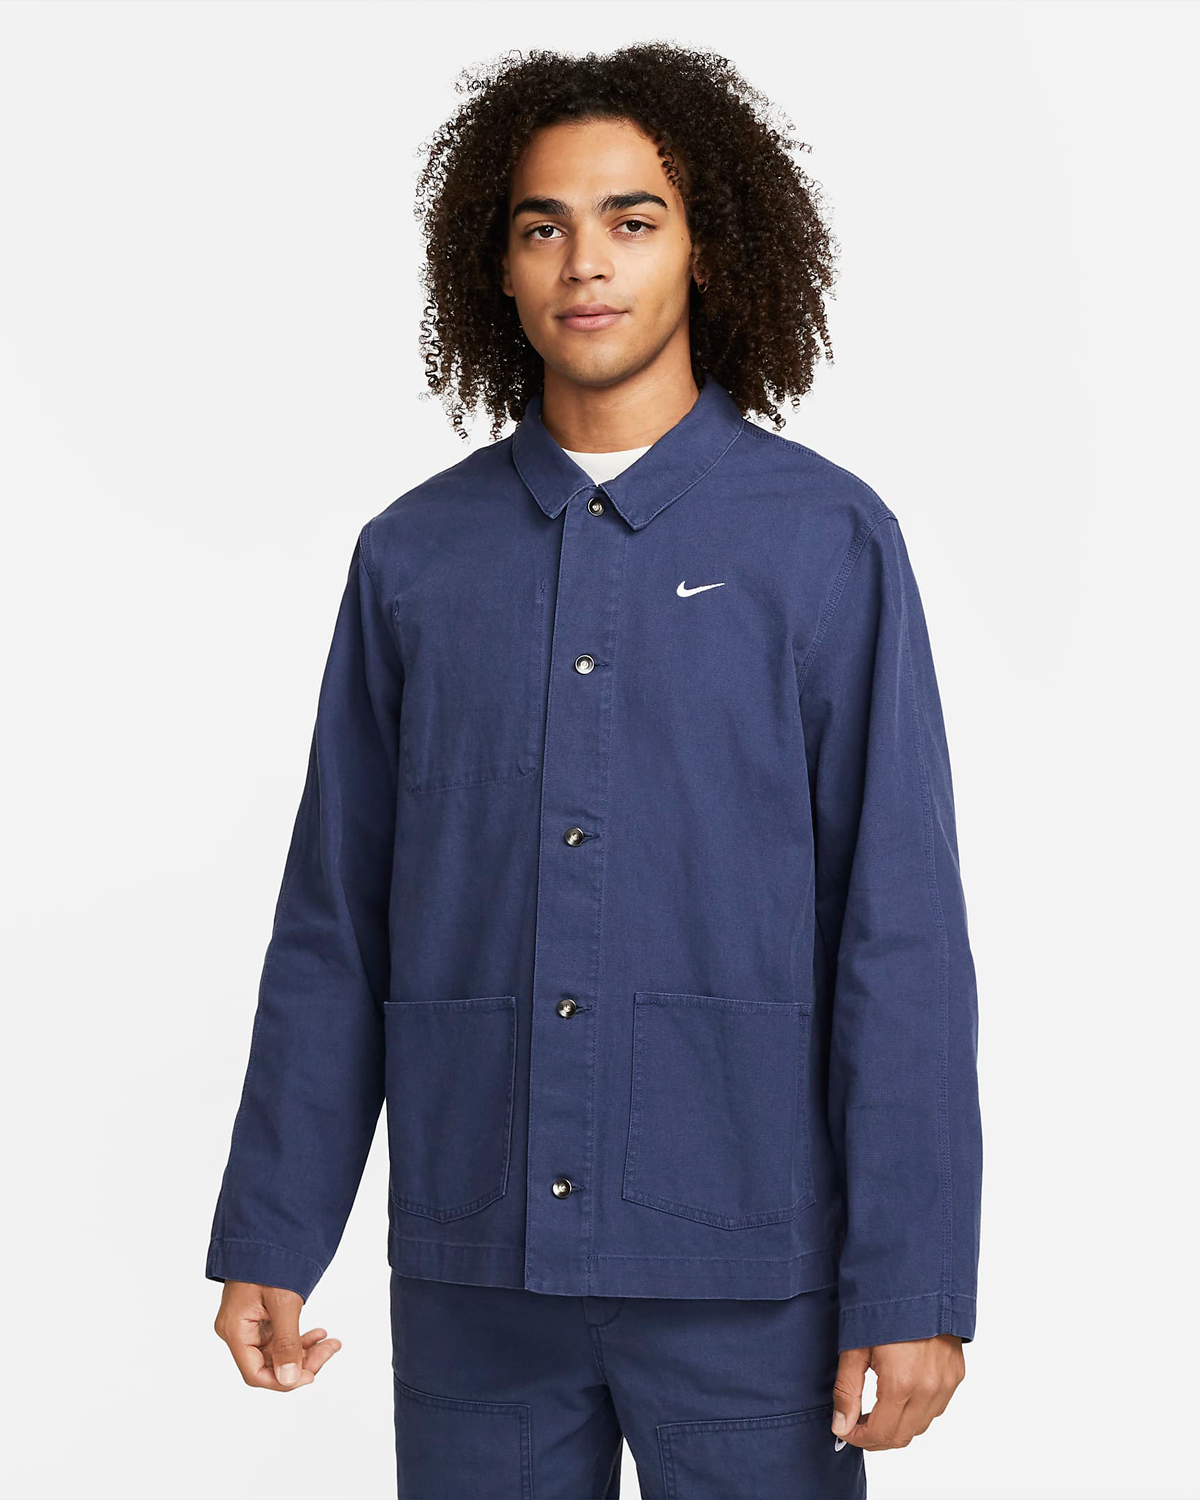 Nike-Sportswear-Chore-Coat-Midnigt-Navy